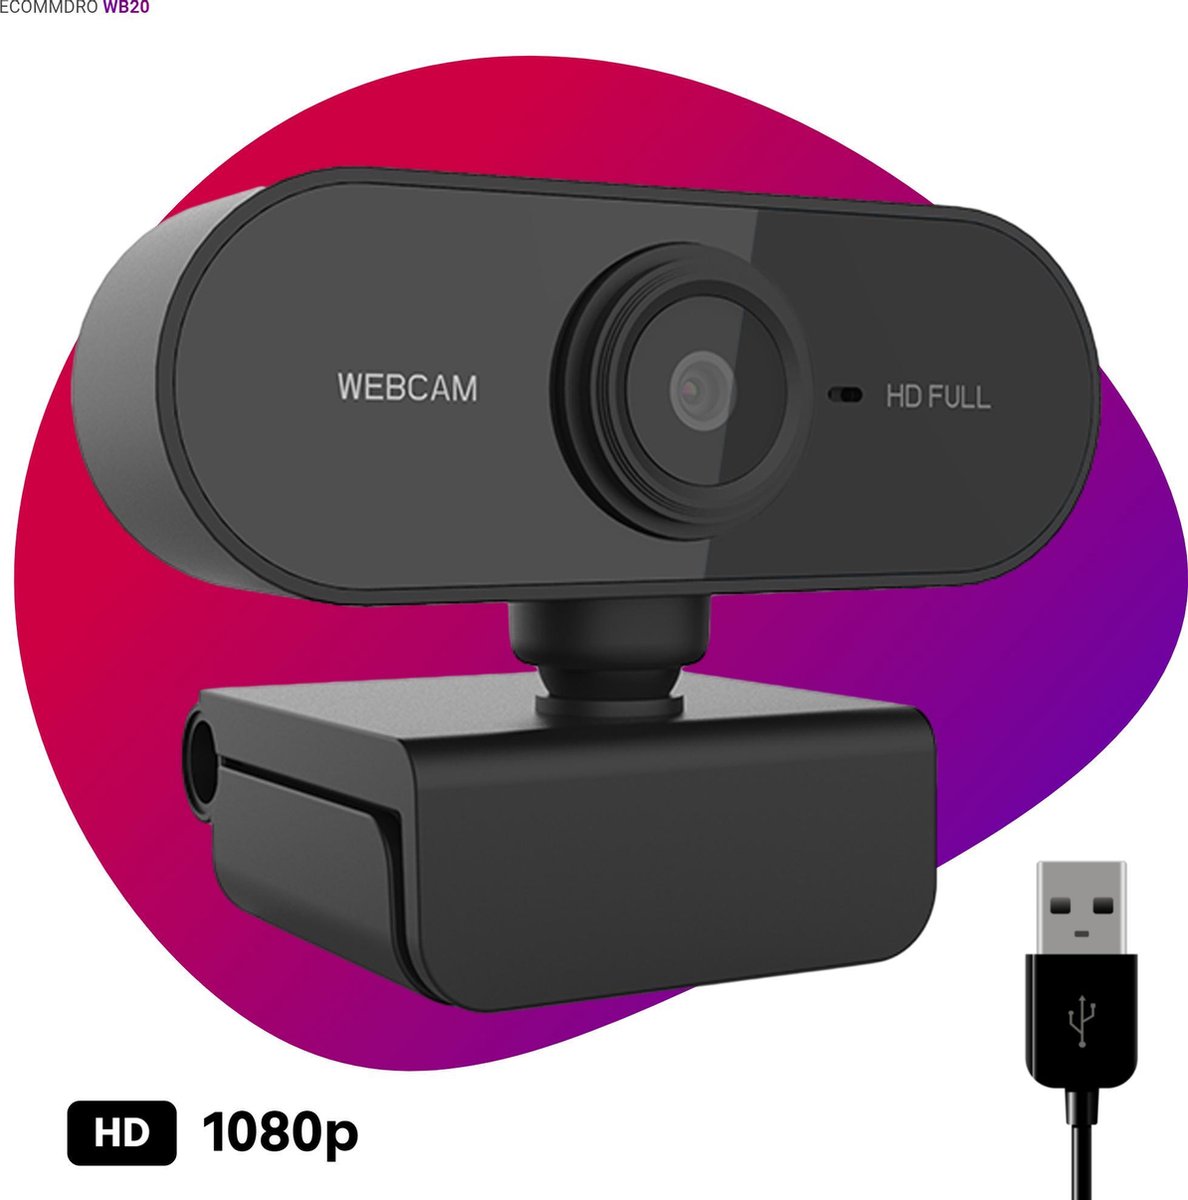 Ecommdro WB20 - Webcam - Microfoon - Full HD 1080p - USB